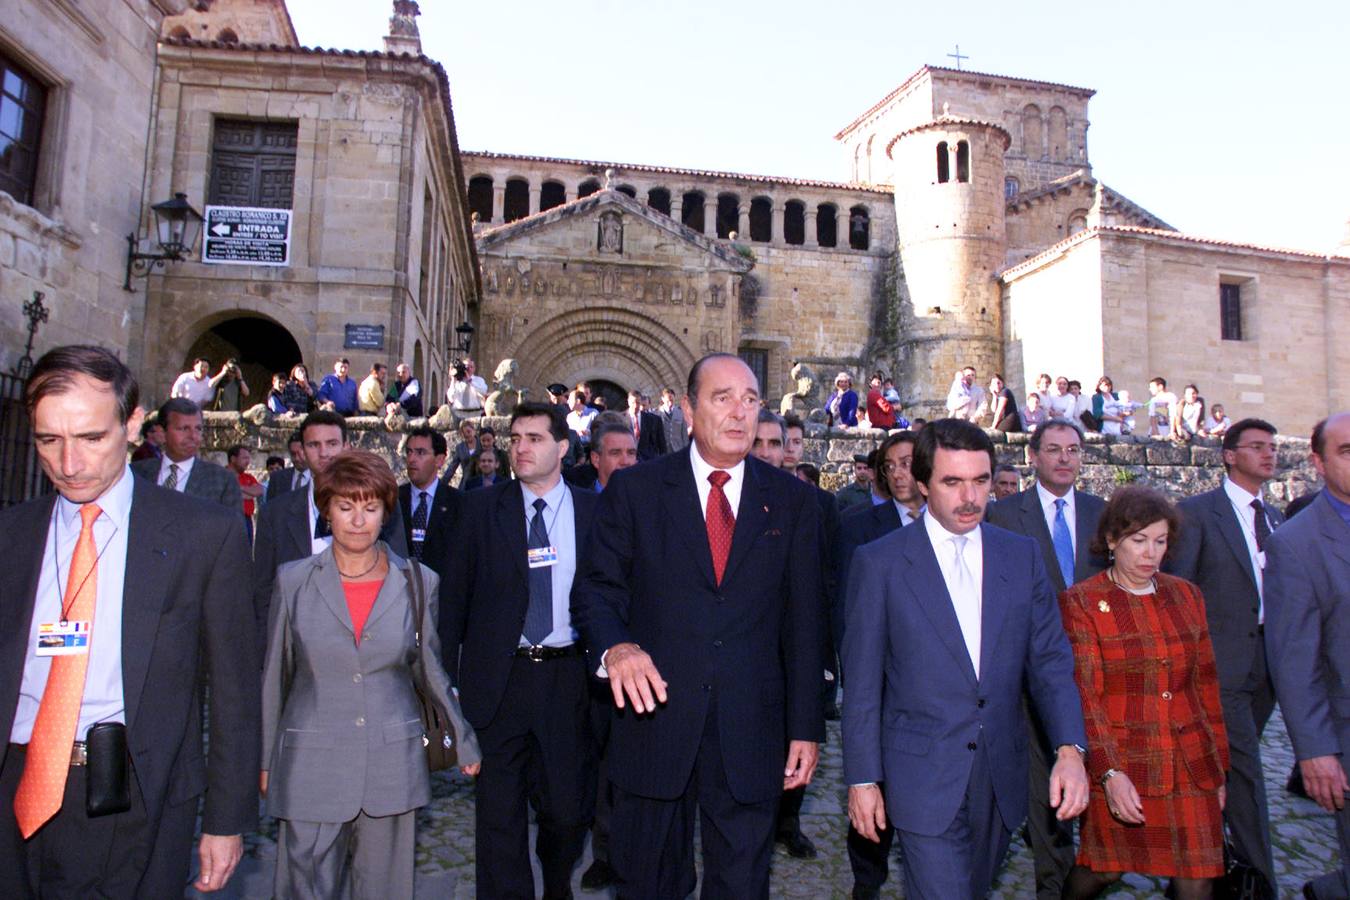 Fotos: La visita de Jacques Chirac a Cantabria en el año 2000